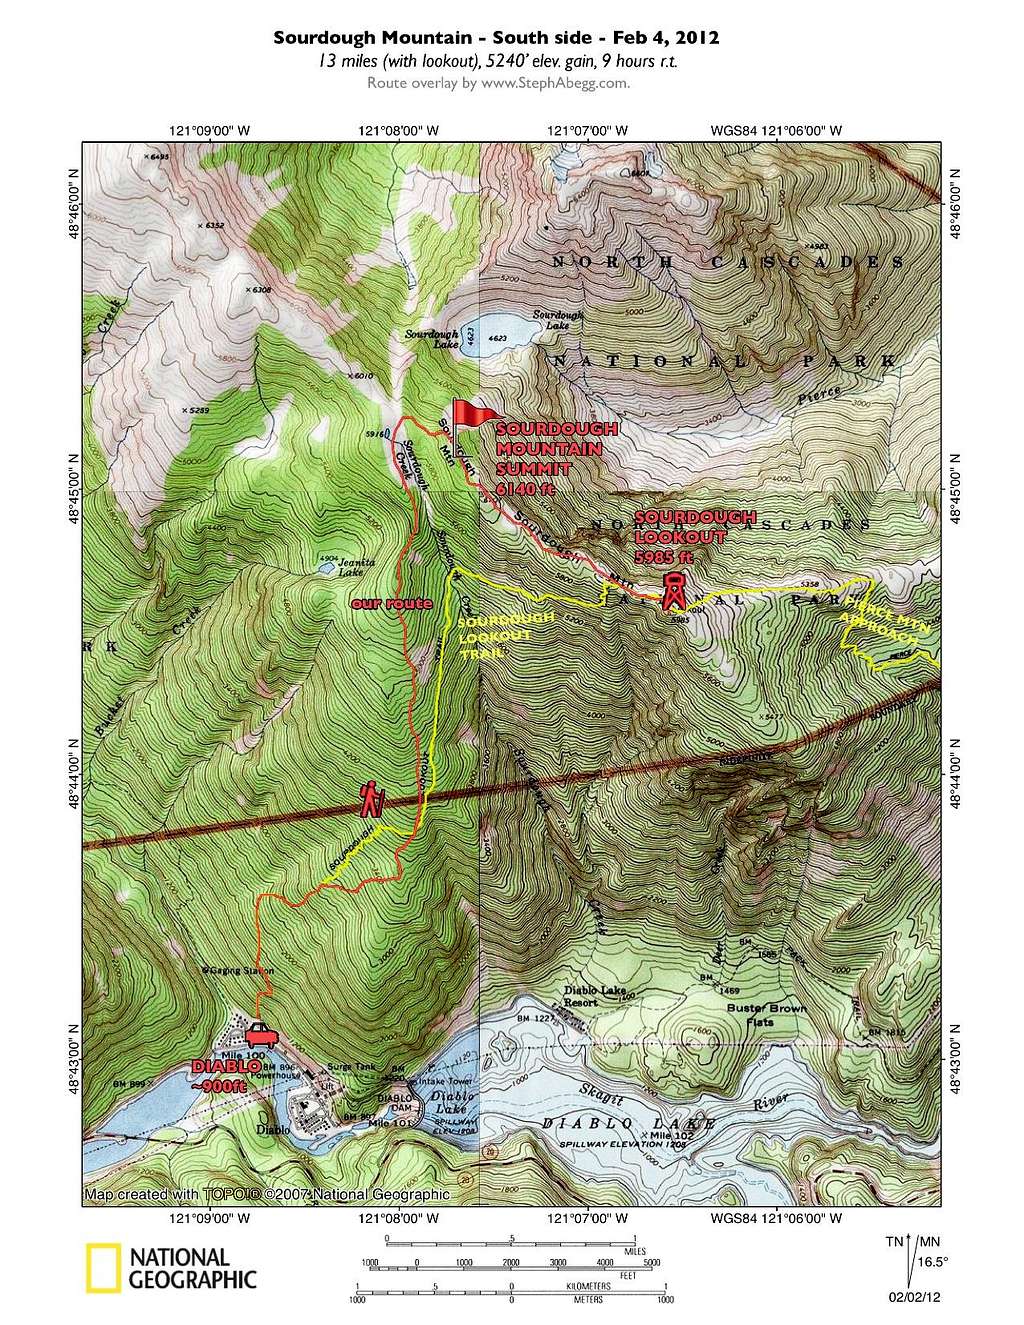 Route overlay of Sourdough Mountain snowshoe